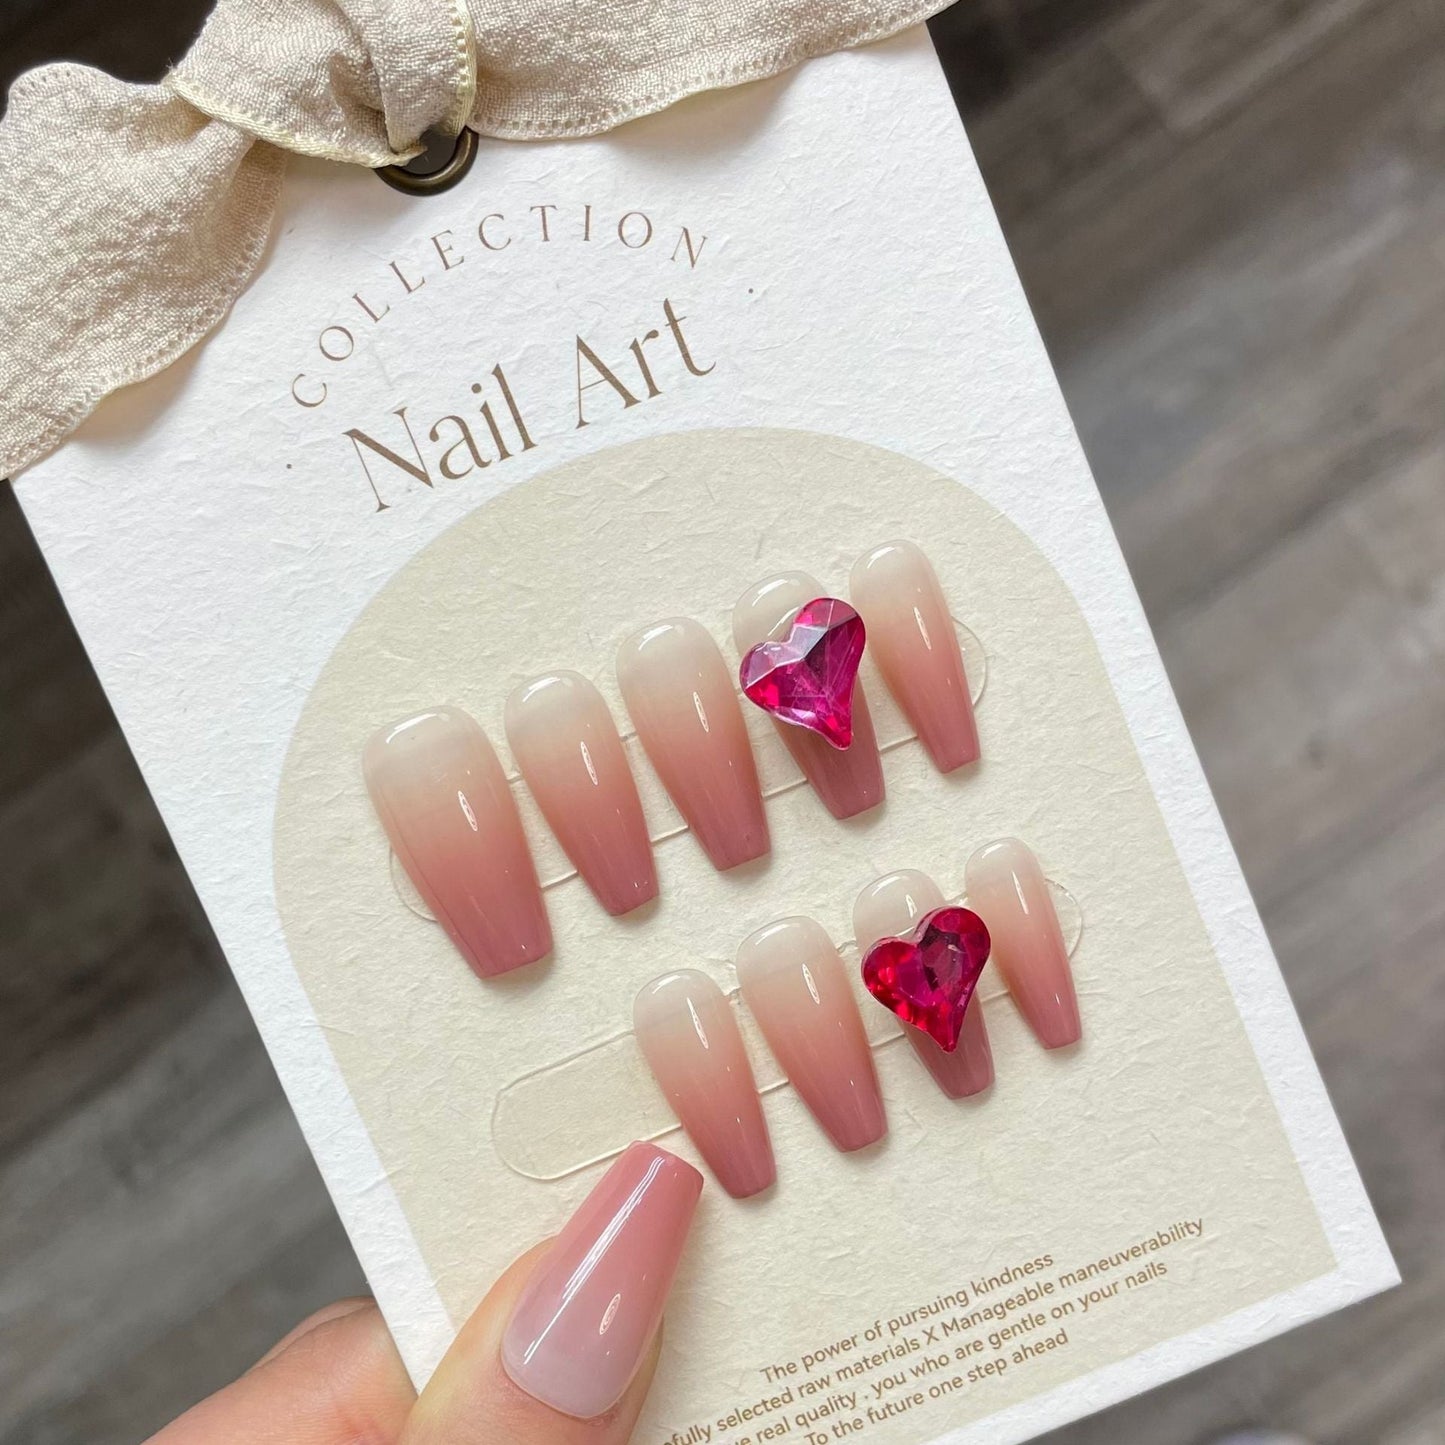 808 Rhinestone style press on nails 100% handmade false nails nude color pink